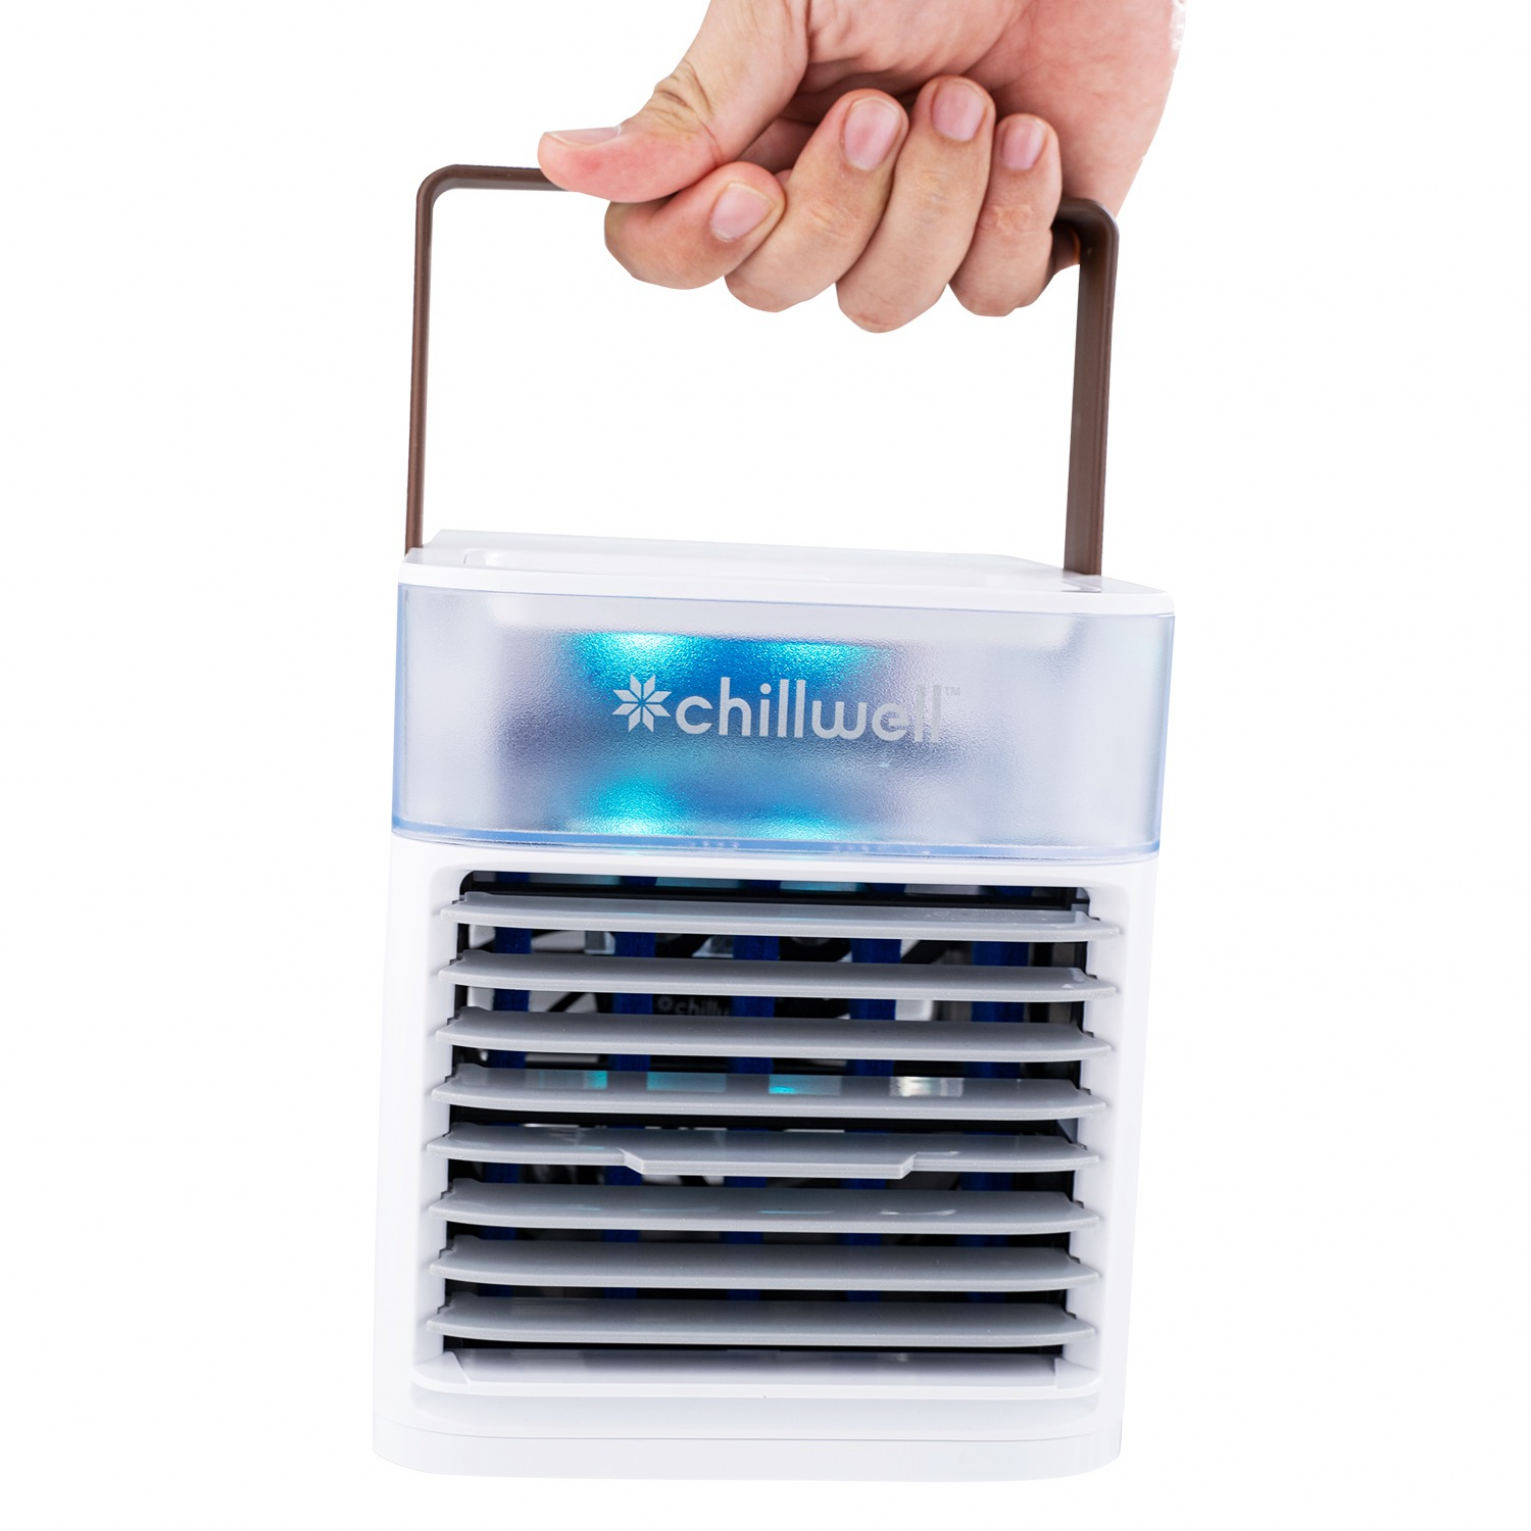 Chillwell AC Chillbox Portable Ac